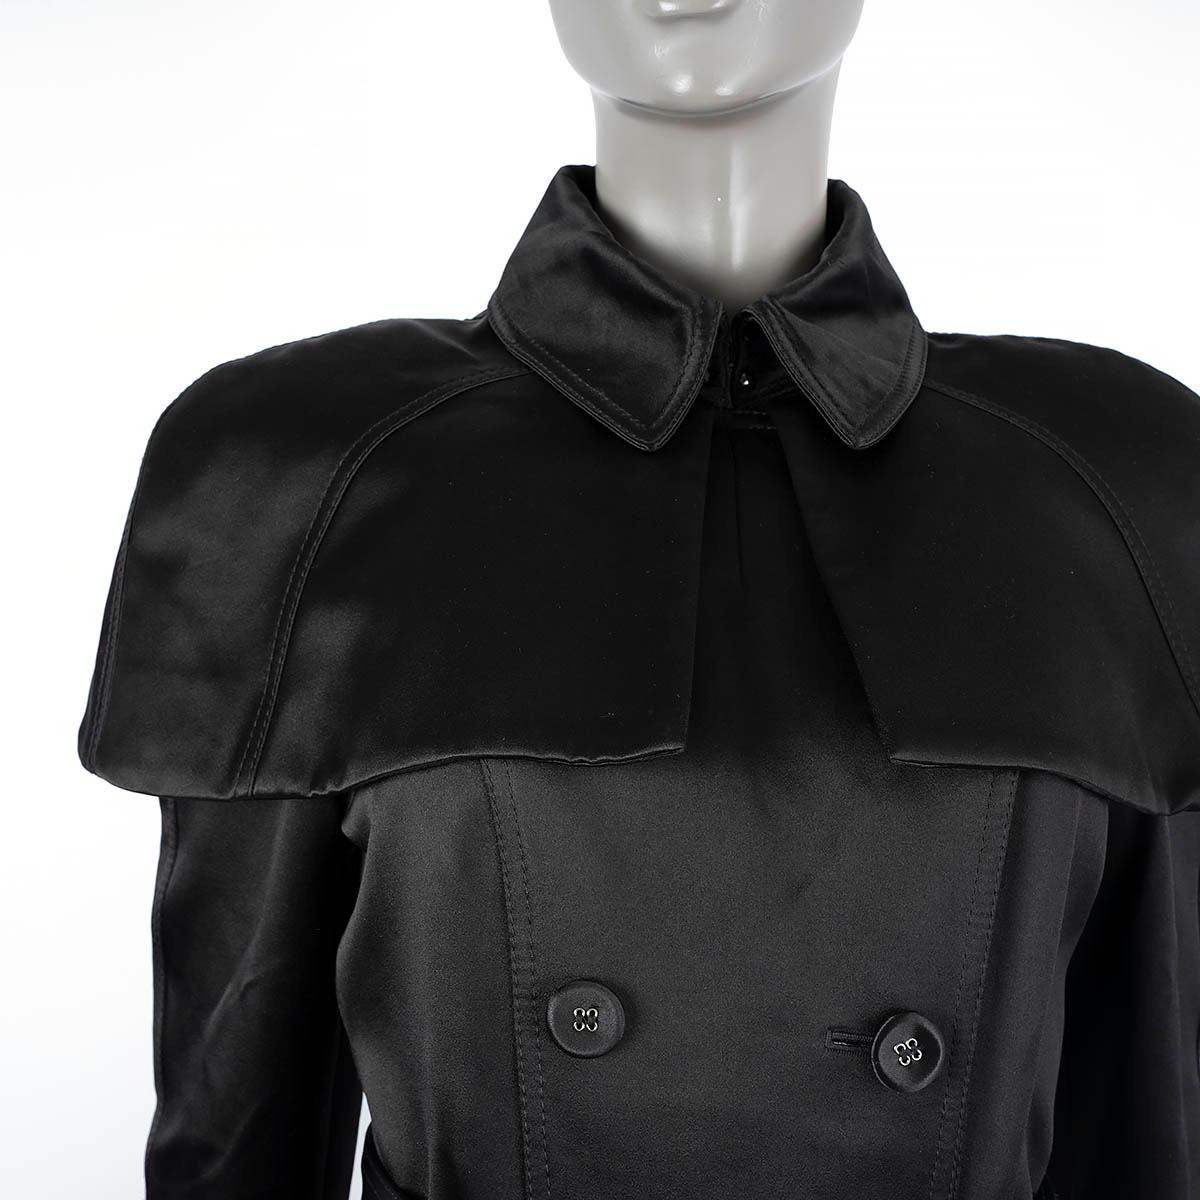 BURBERRY PRORSUM black 2013 DOUBLE DUCHESSE CAPED TRENCH Coat Jacket 42 M For Sale 2